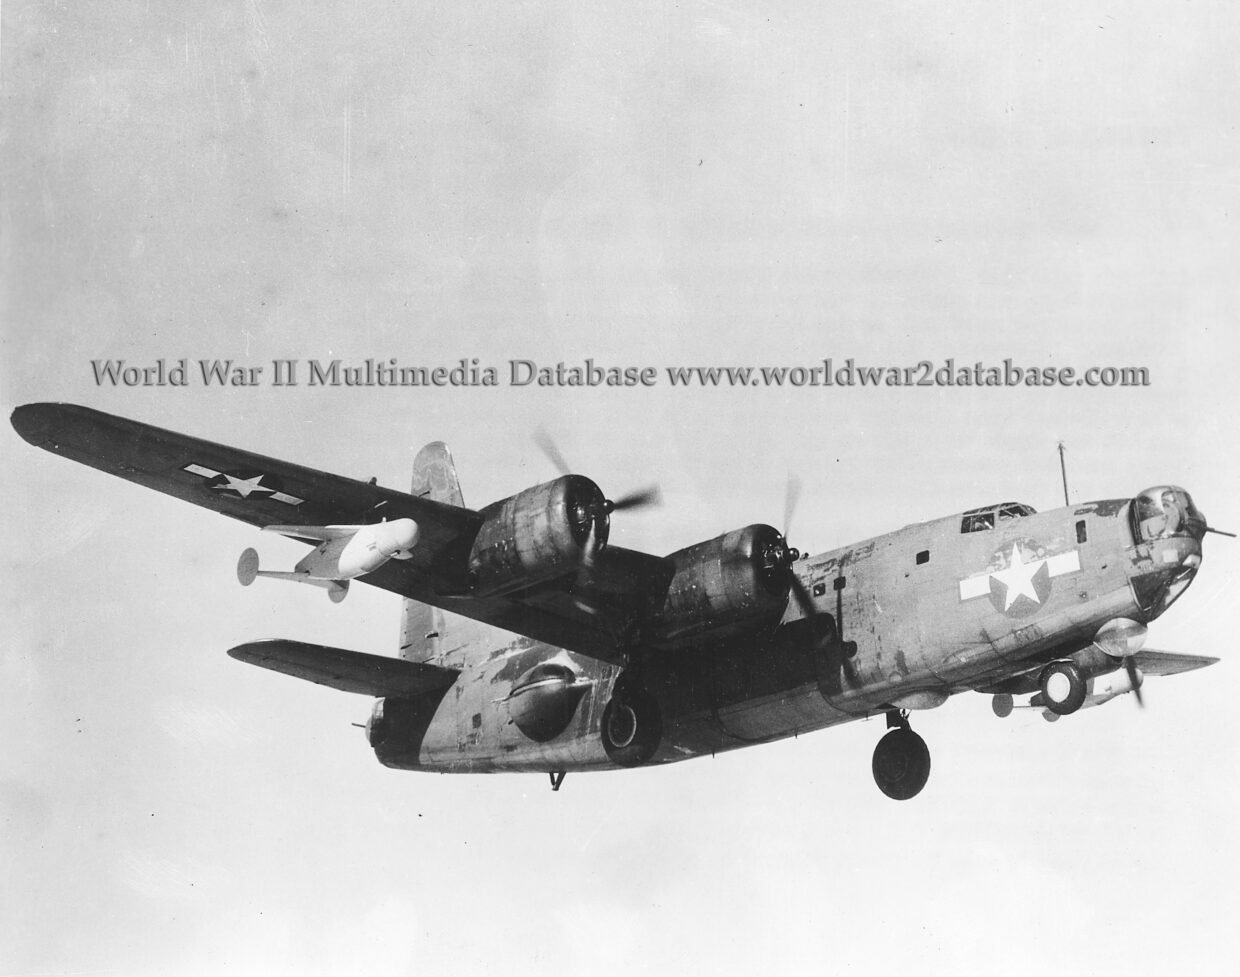 PB4Y-2 with SWOD Mark 9 “Bat“ Bombs